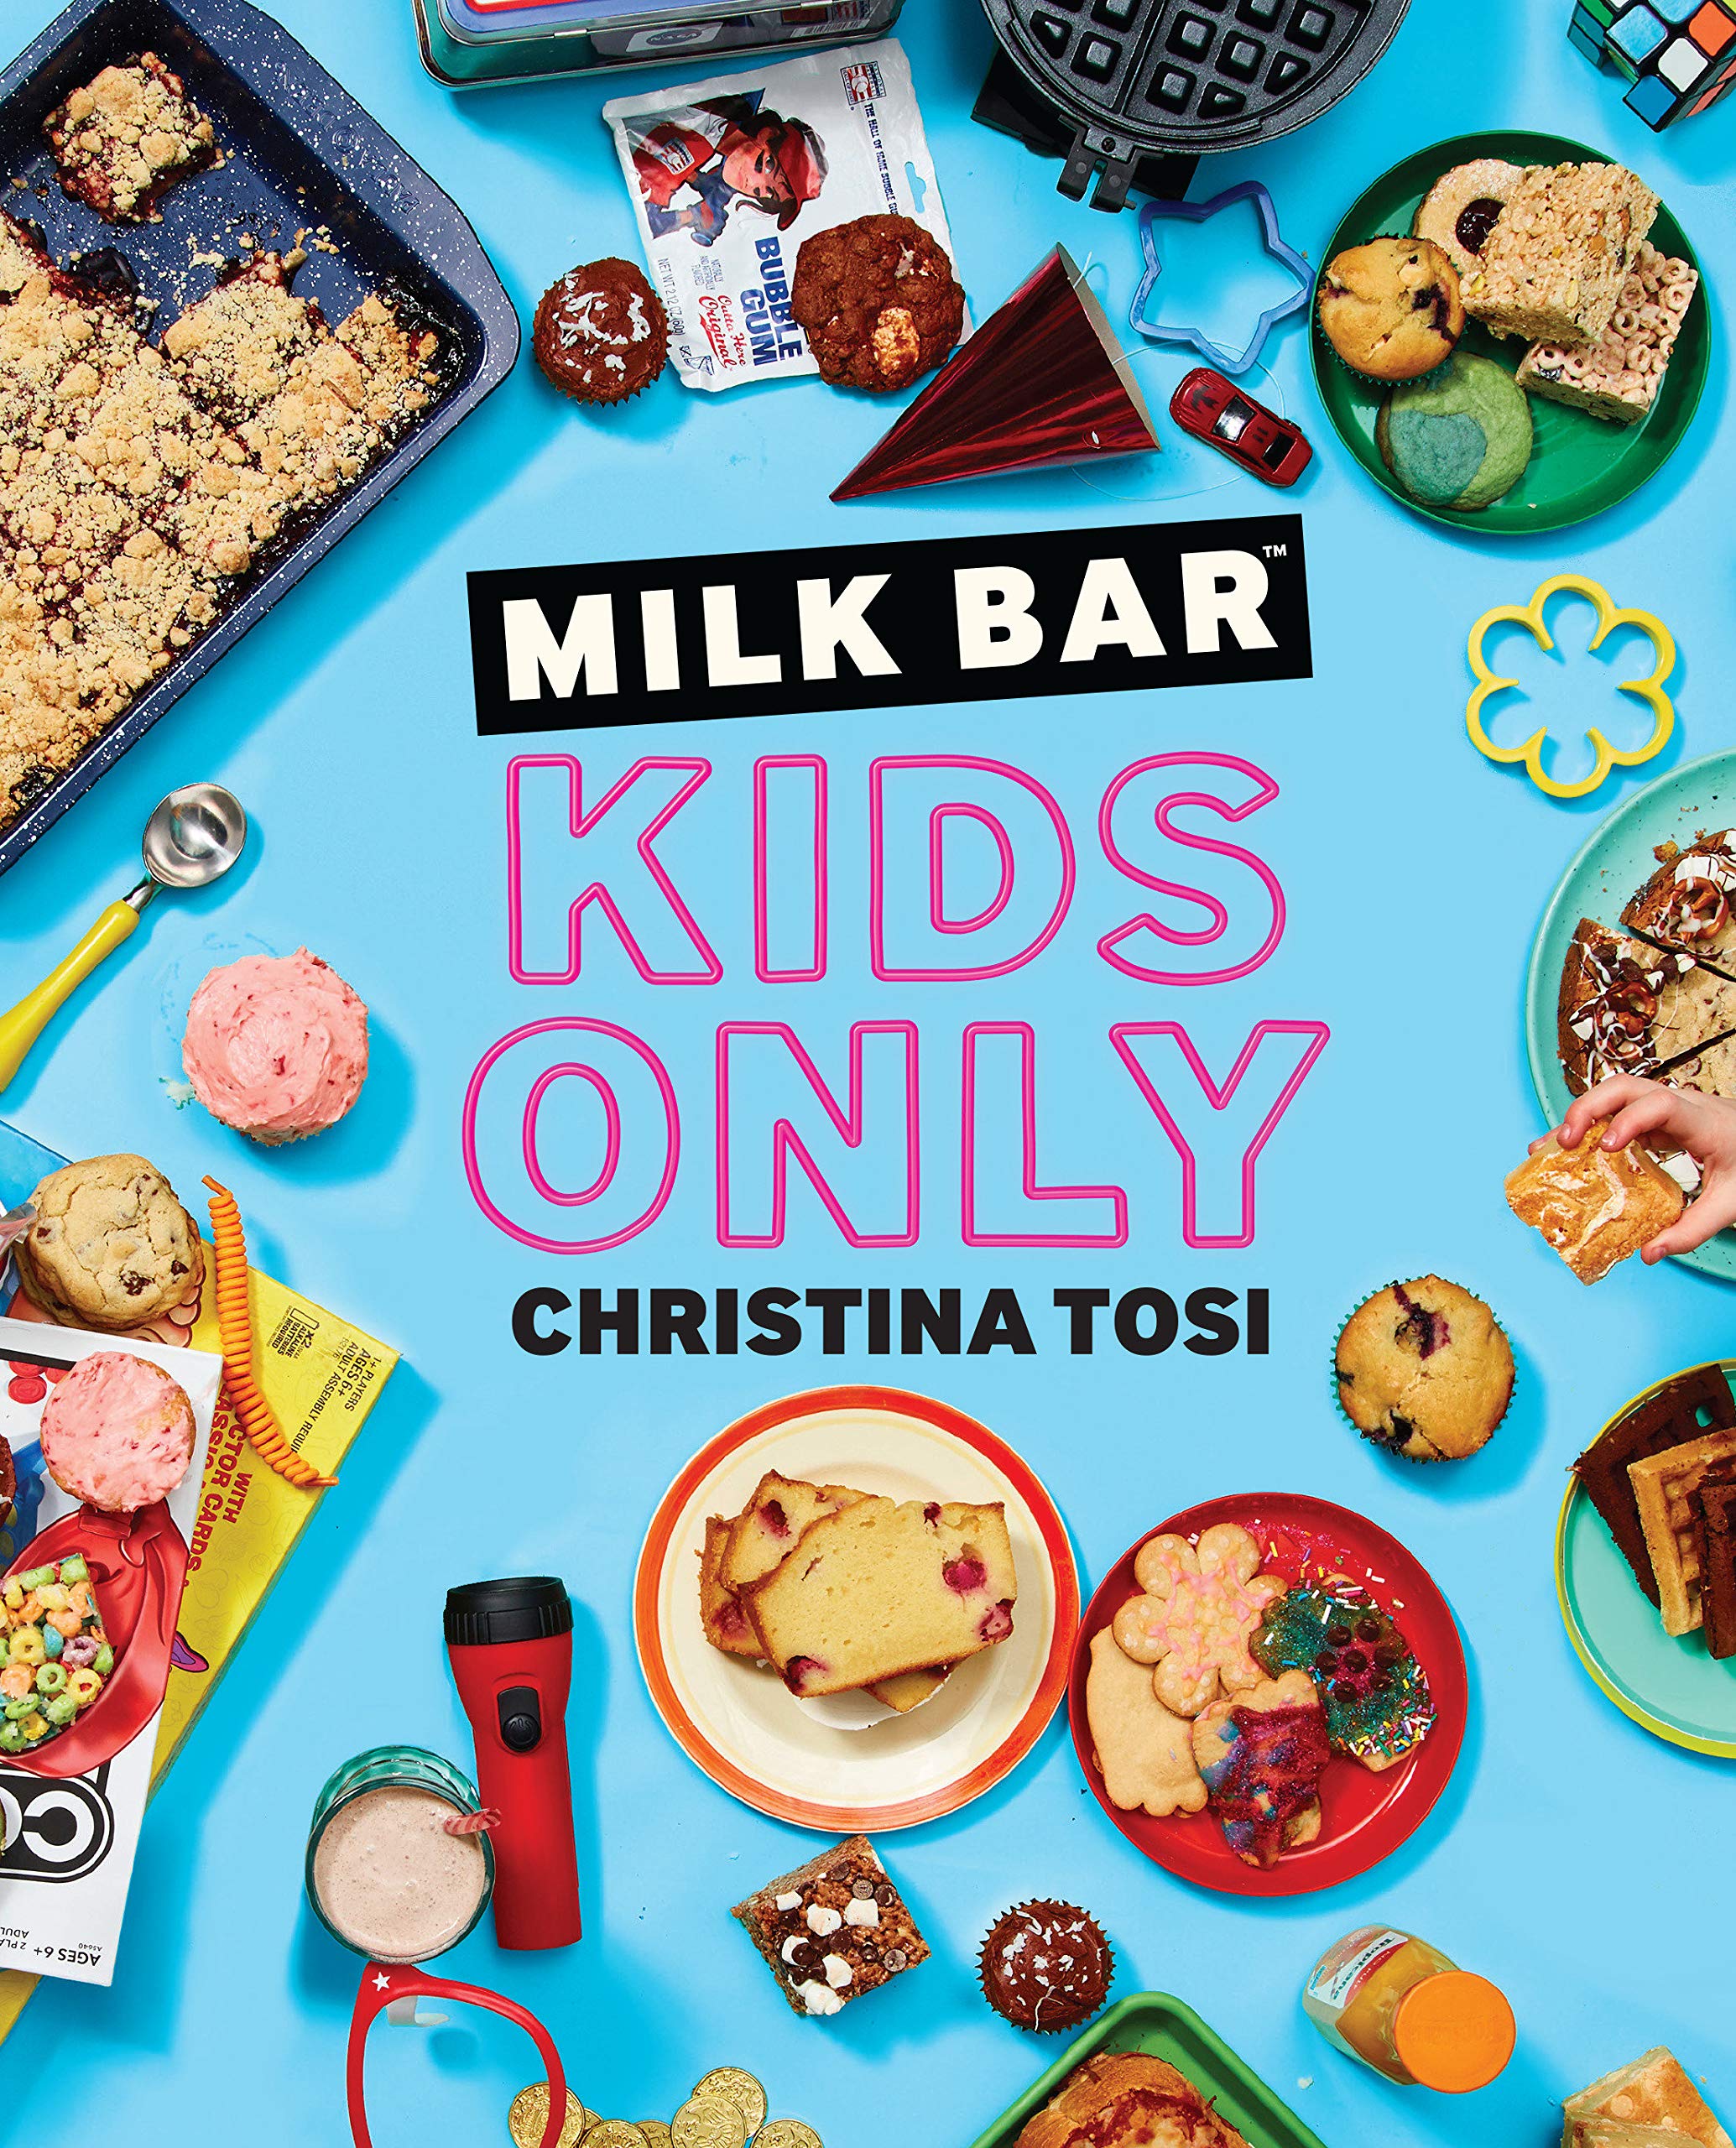 Milk Bar: Kids Only (Christina Tosi)